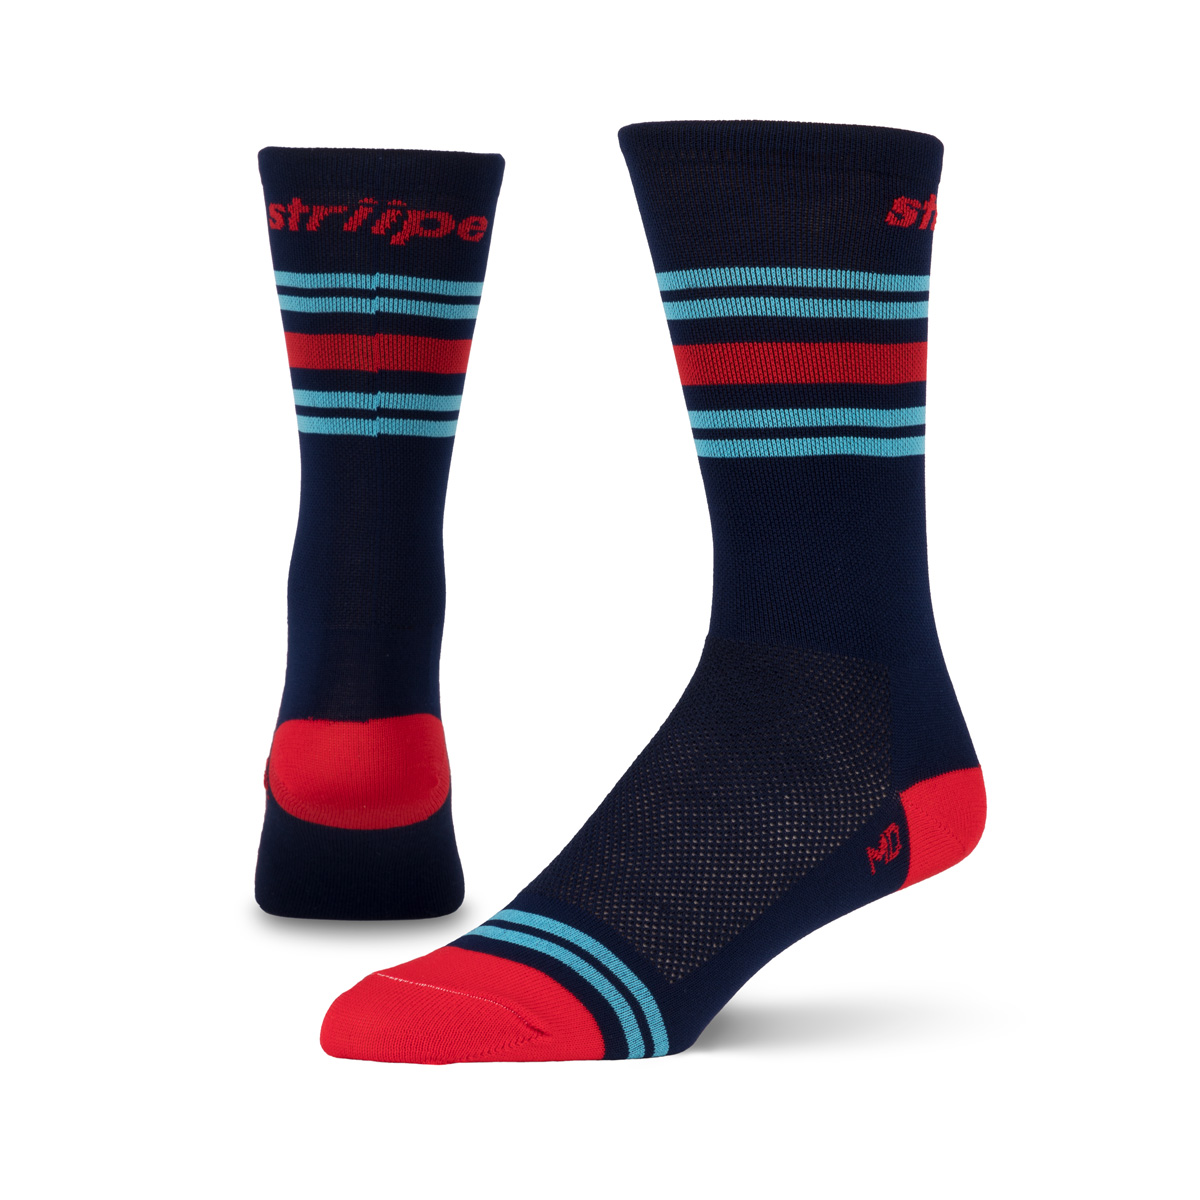 Martini (Blue) Socks by Striipe Design - Choice Gear